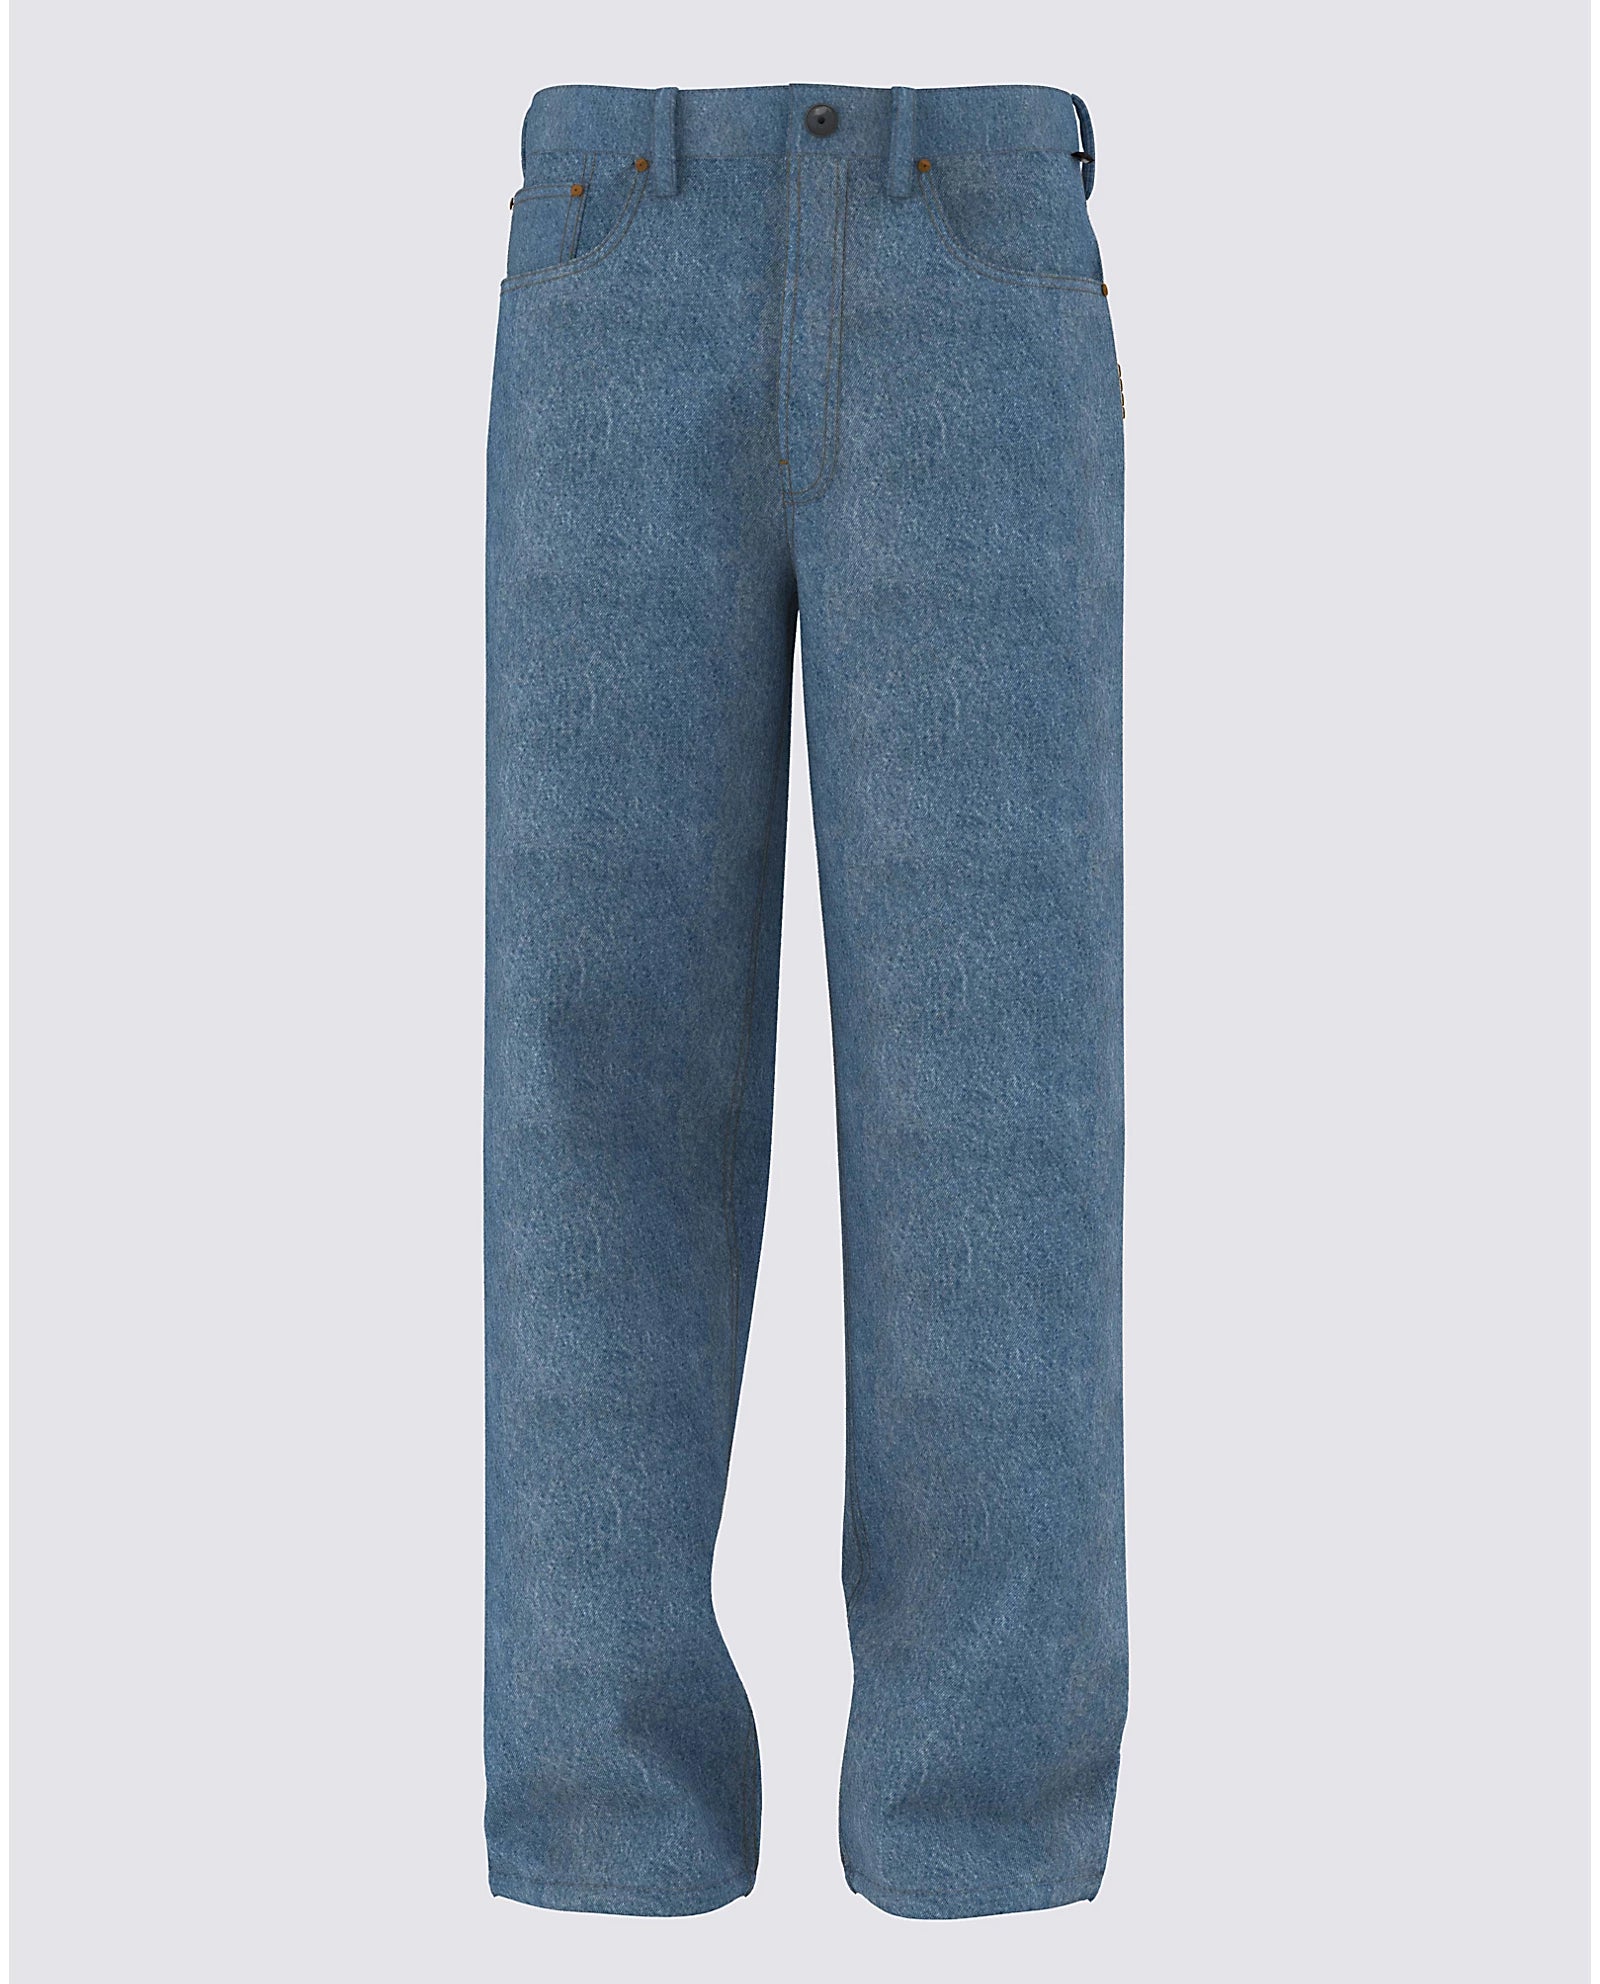 Check - 5 – listed) Denim Shop options Stonewash/Blu(size Dogwood Skate Pant Baggy